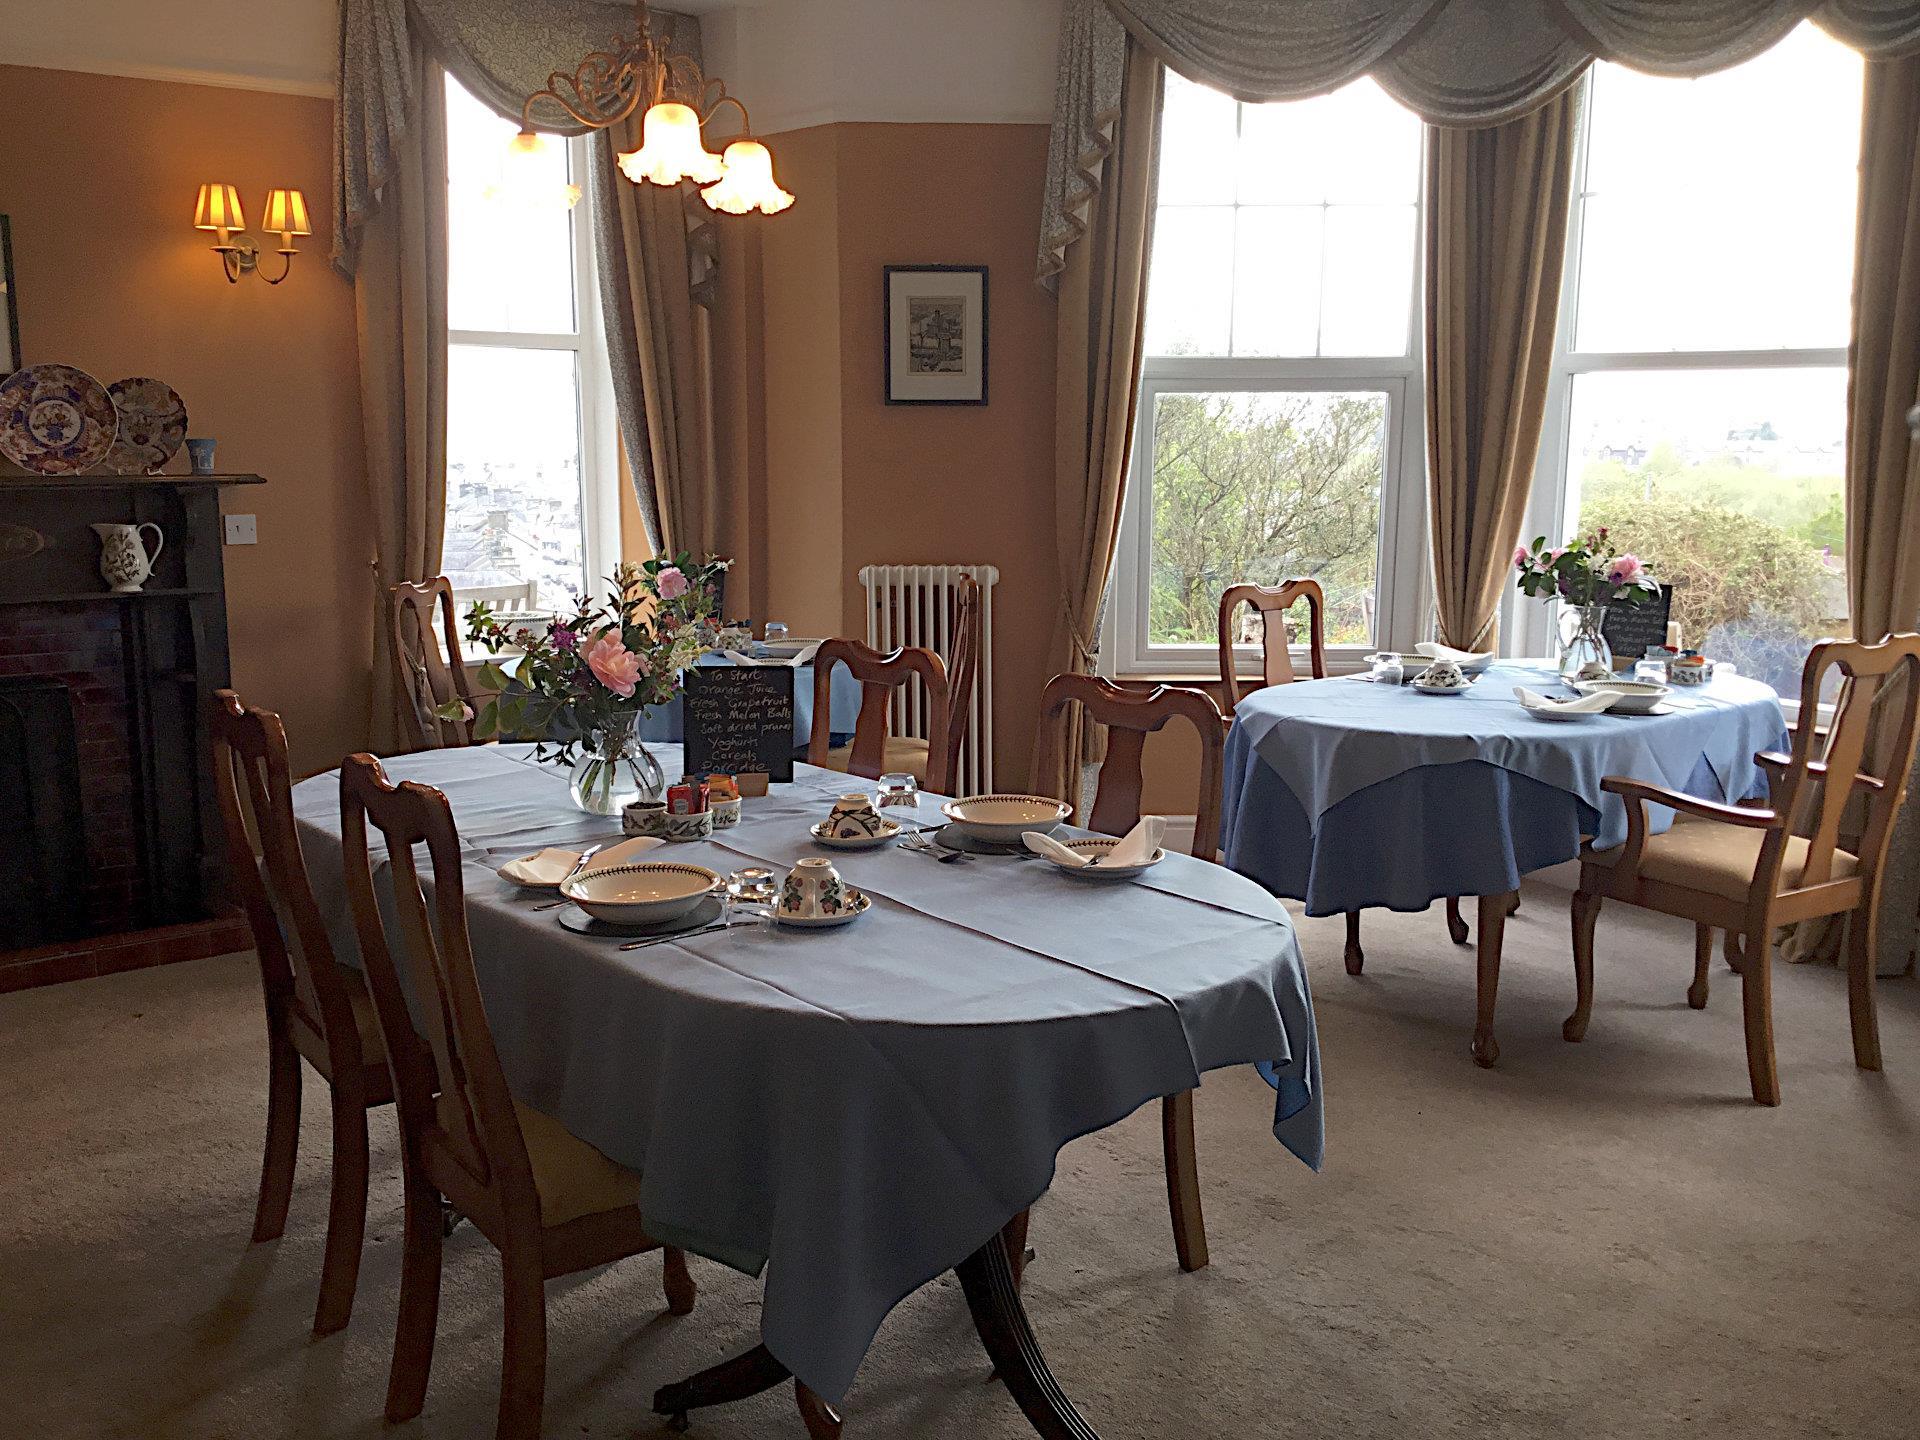 The dining room at Wenallt